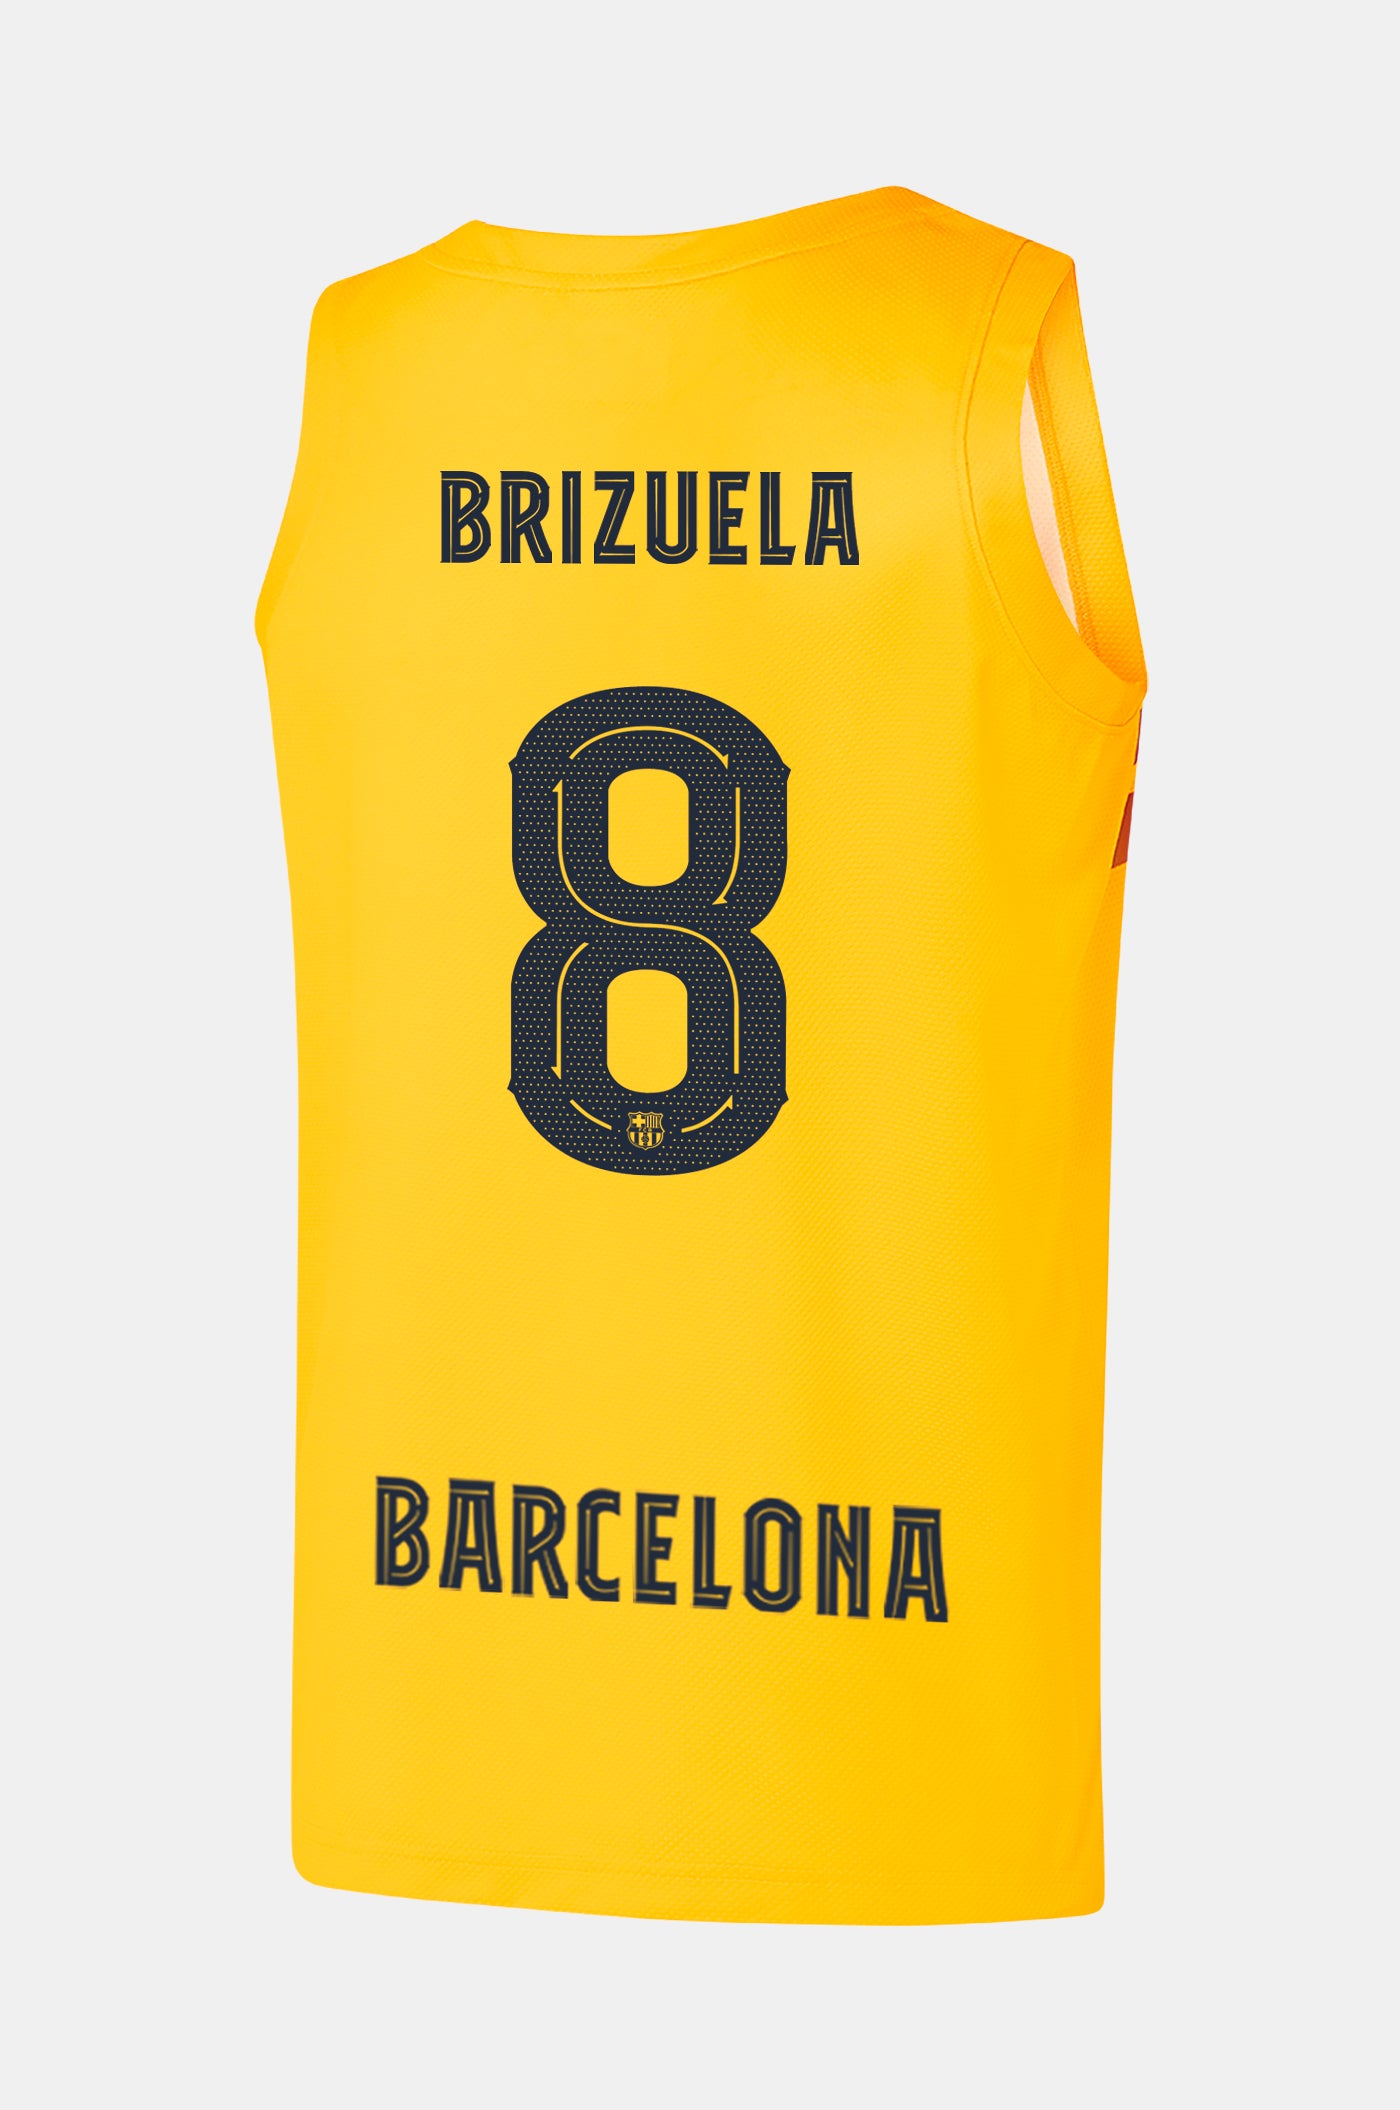 EUROLEAGUE - 4 Kit Basketball FC Barcelona 22/23 - BRIZUELA